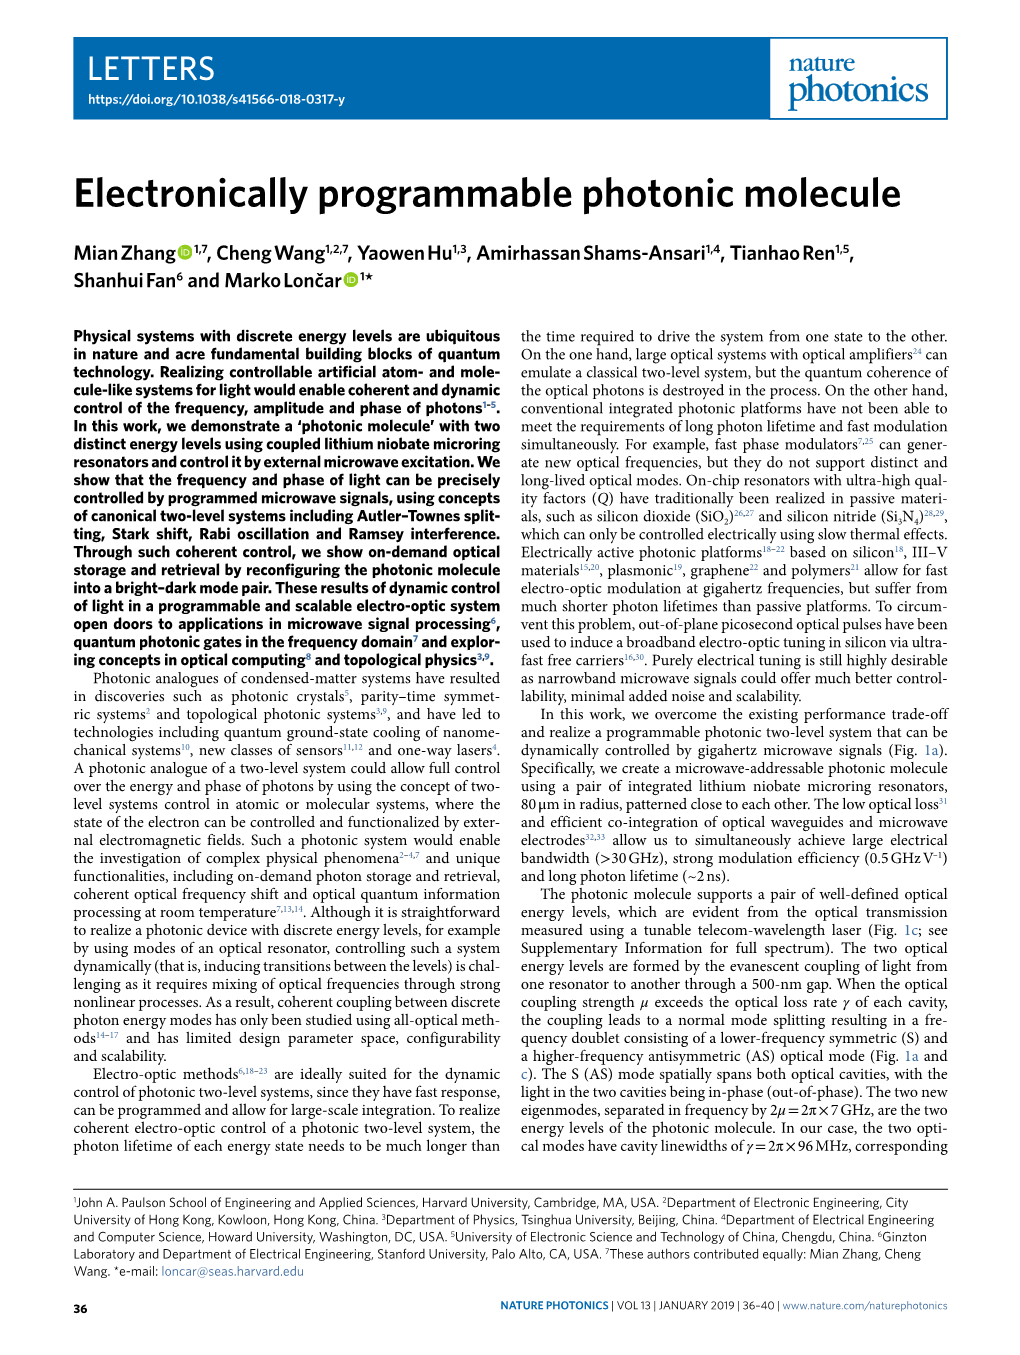 Electronically Programmable Photonic Molecule